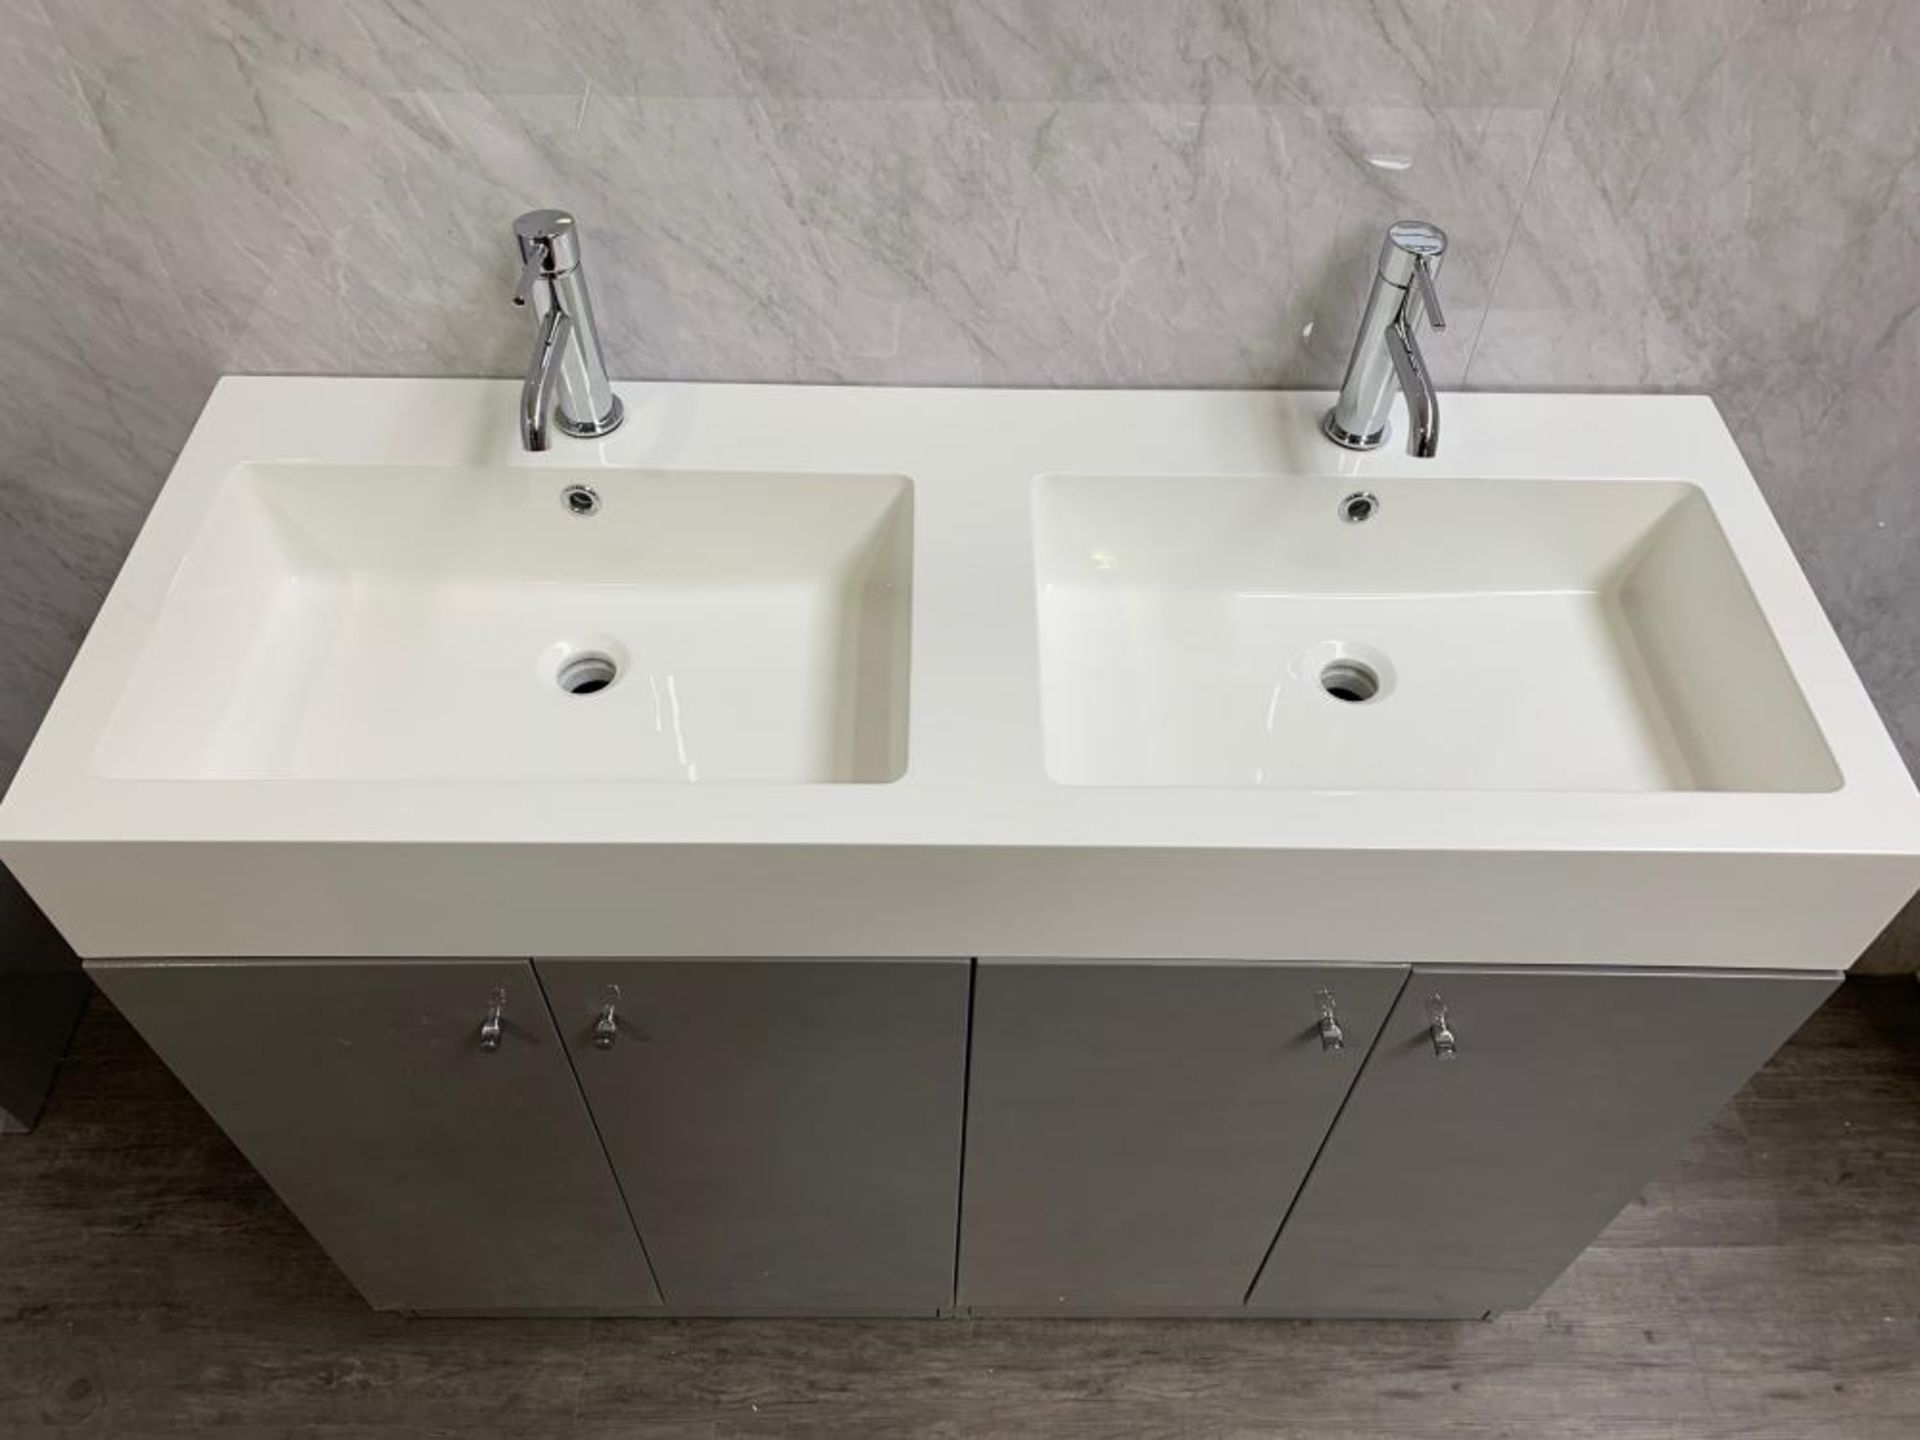 1 x Gloss Grey 1200mm 4-Door Double Basin Freestanding Bathroom Cabinet - New & Boxed Stock - CL406 - Image 2 of 2